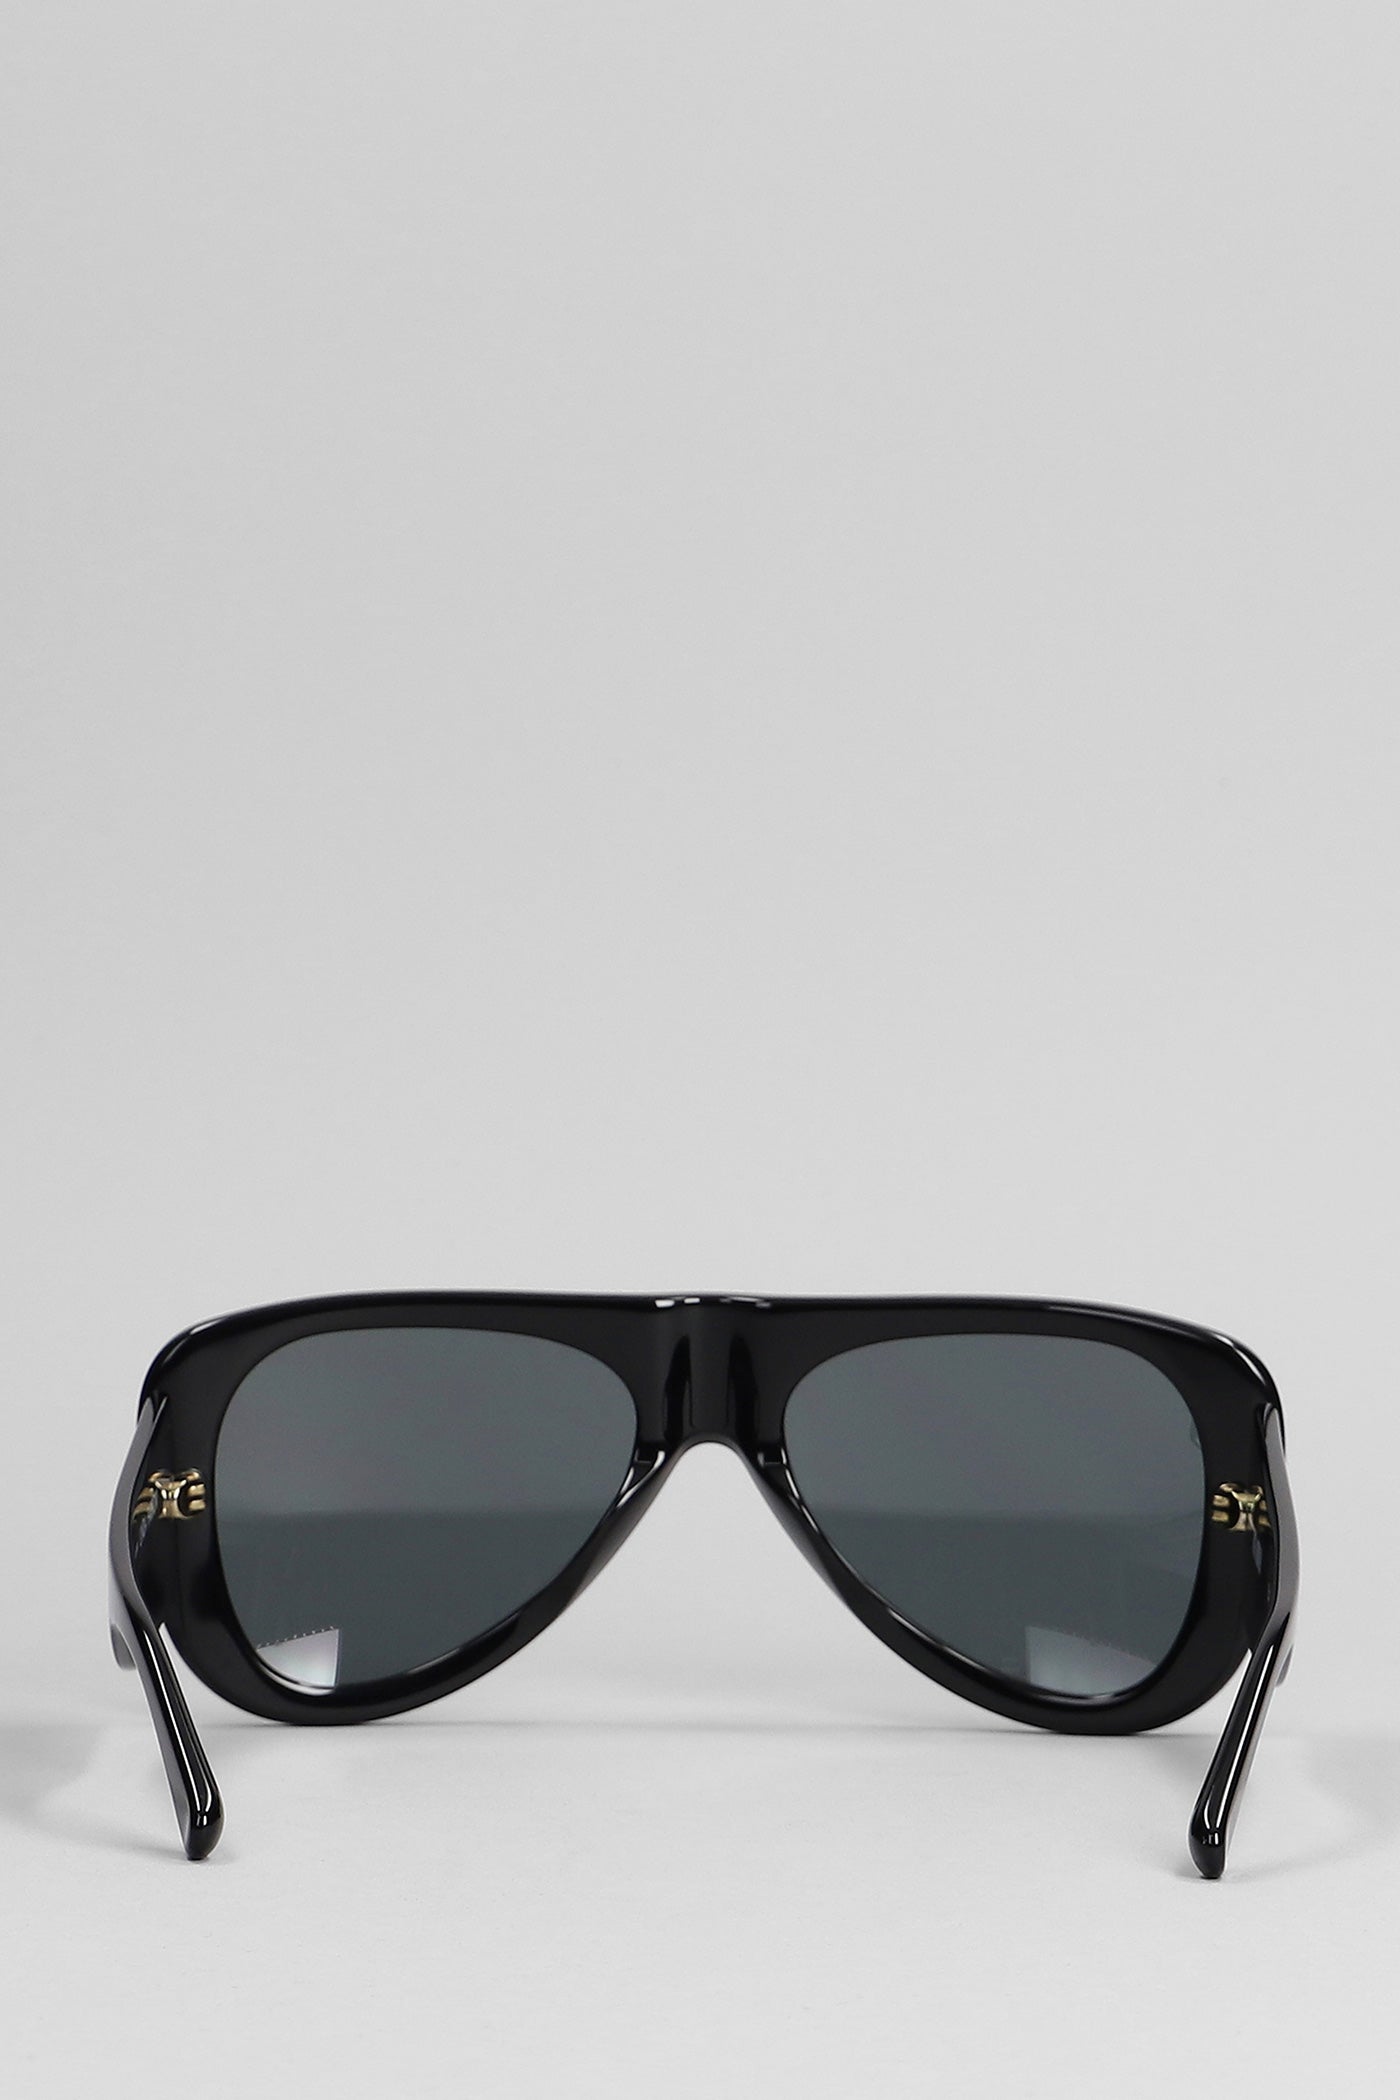 Sunglasses in black acrylic